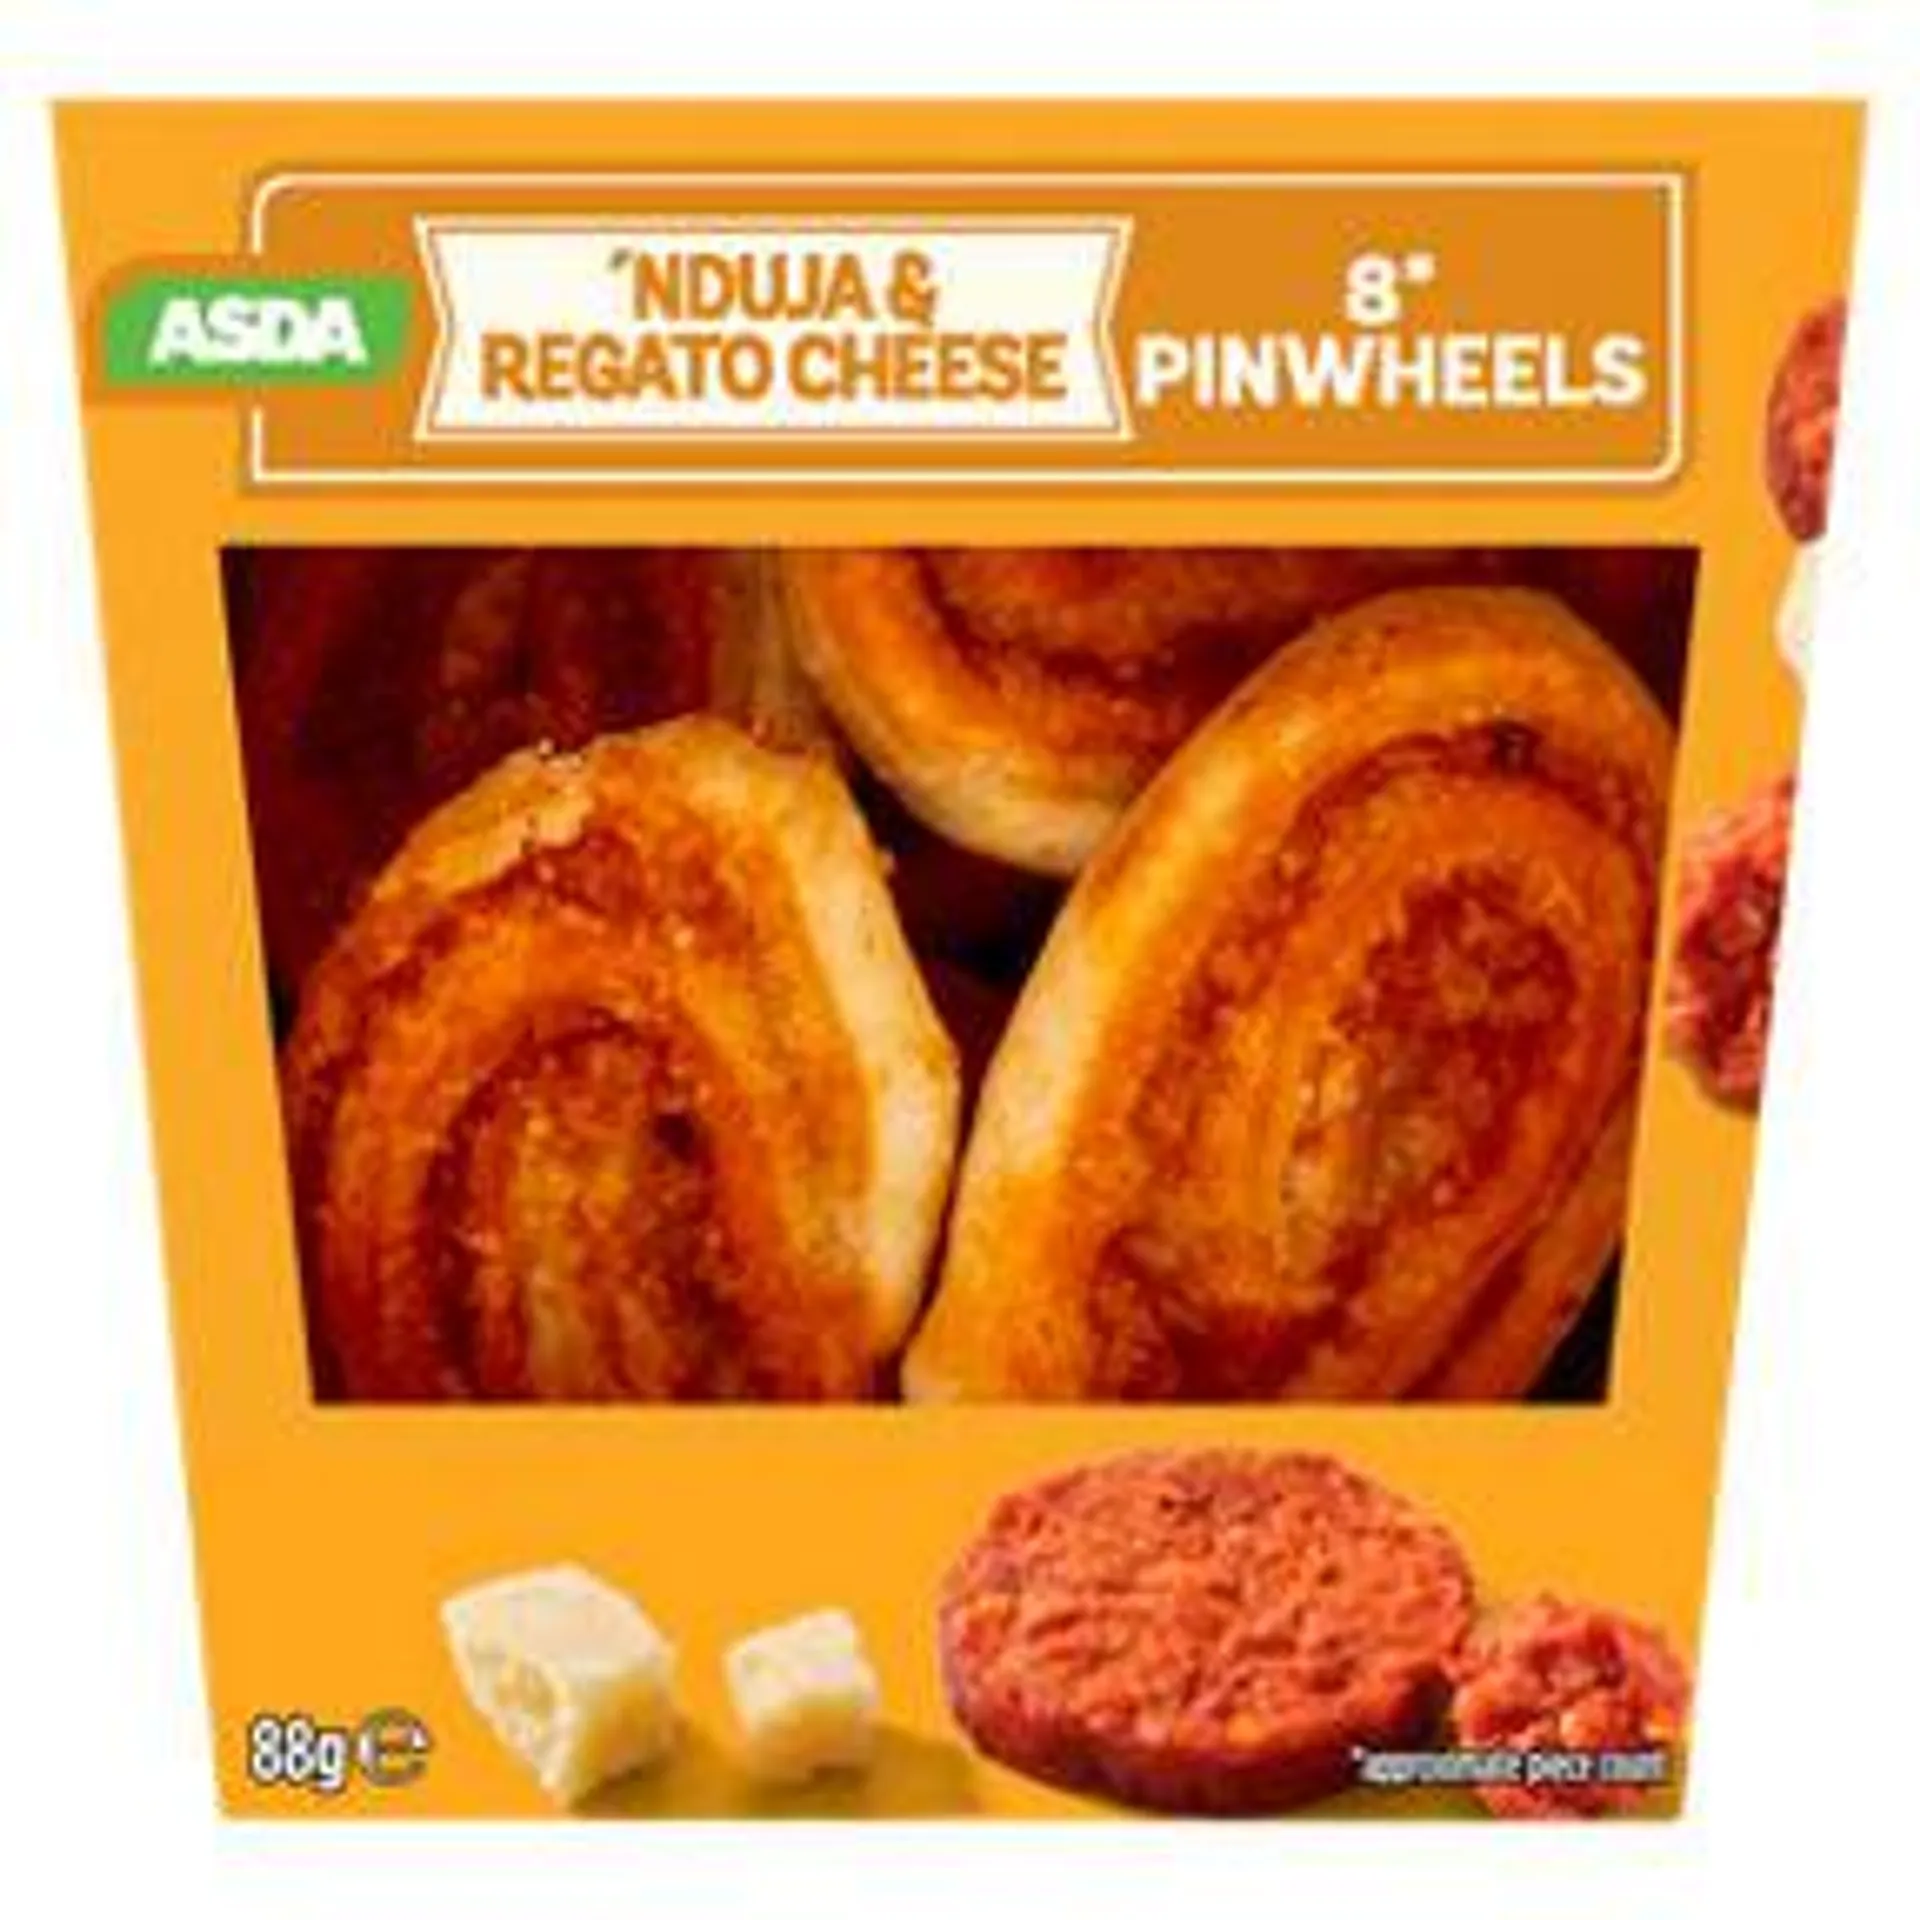 ASDA 8 'Nduja & Regato Cheese Pinwheels